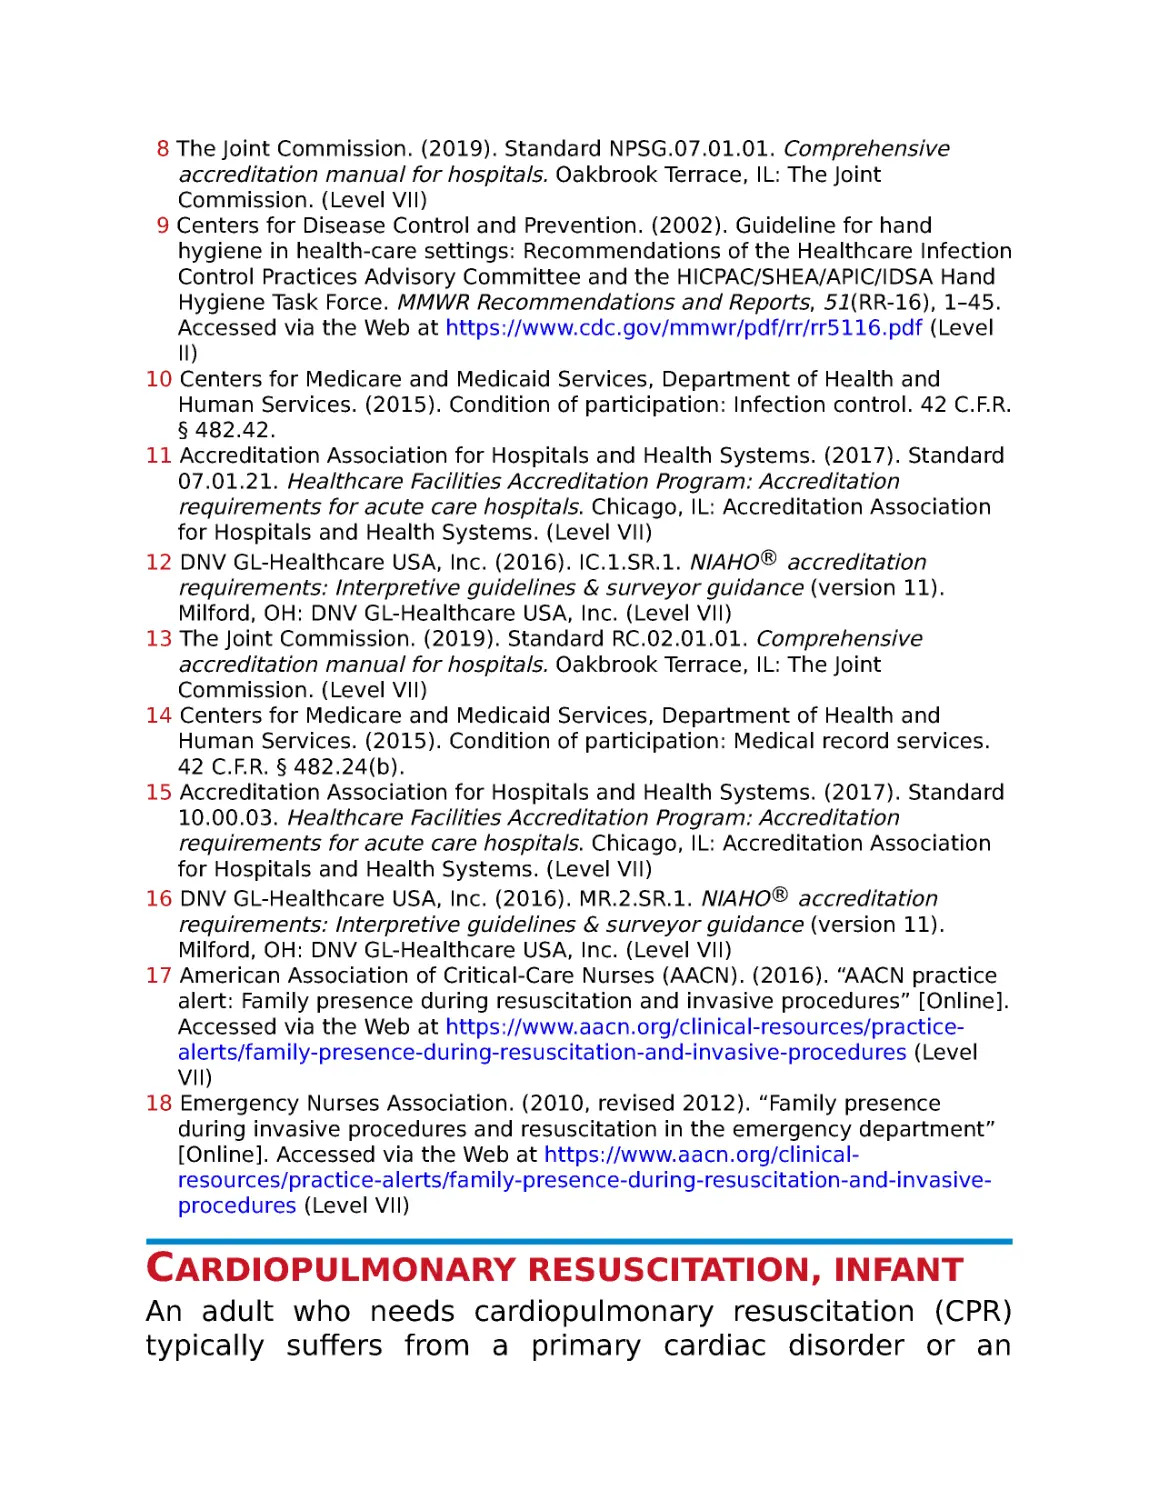 Cardiopulmonary resuscitation, infant